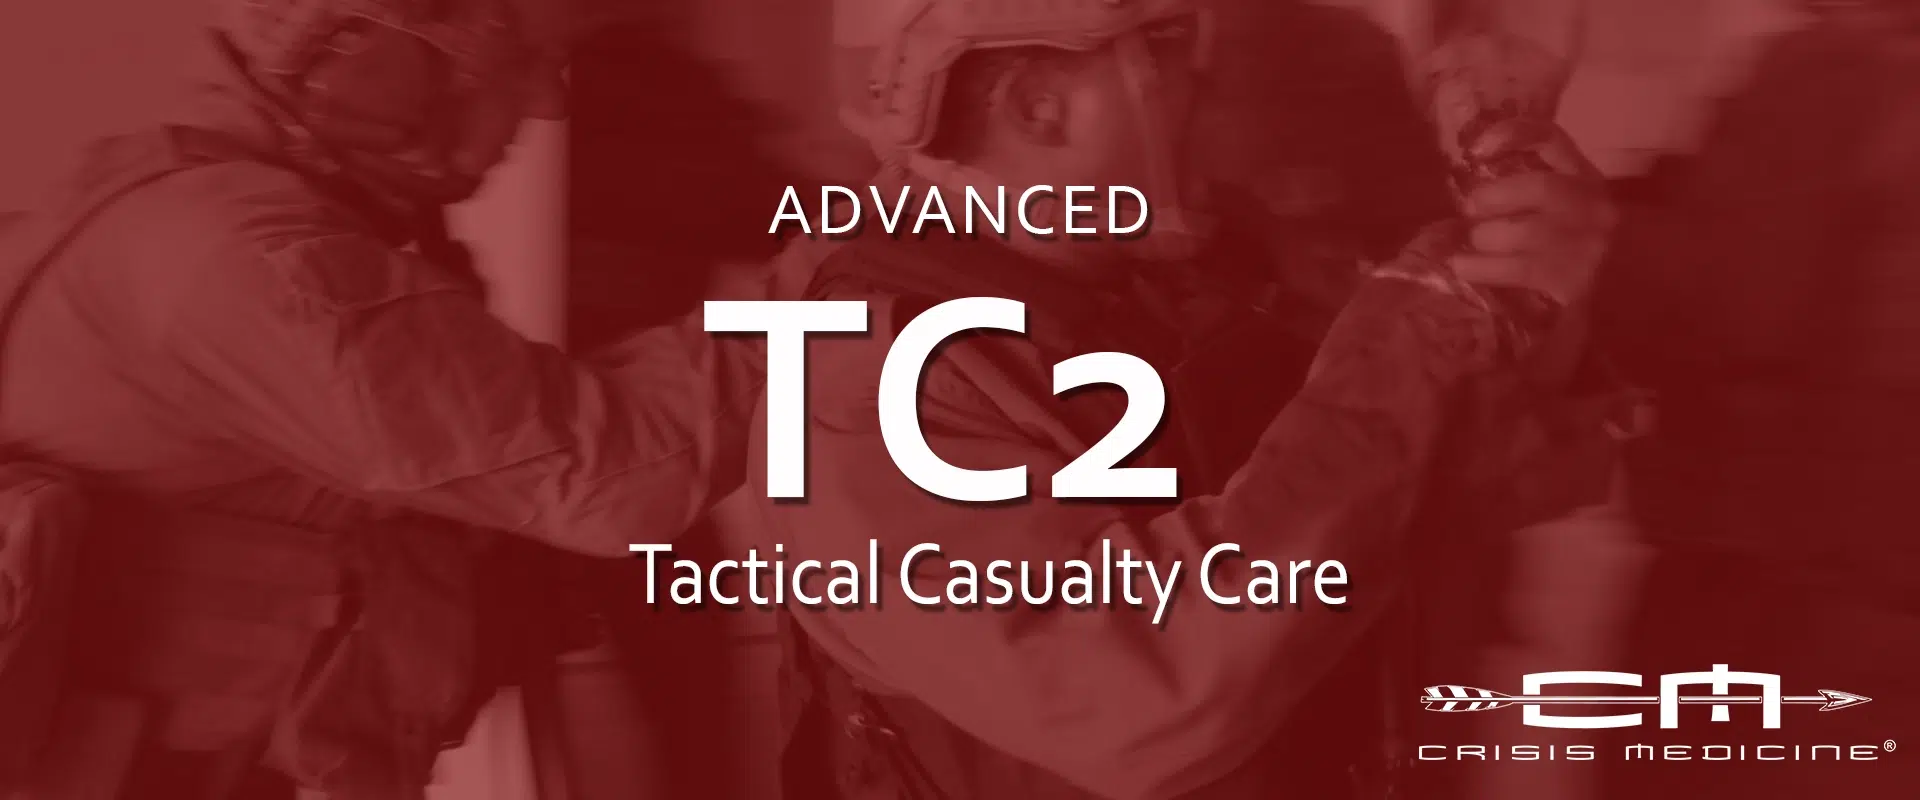 Crisis Medicine Advanced Tactical Casualty Care